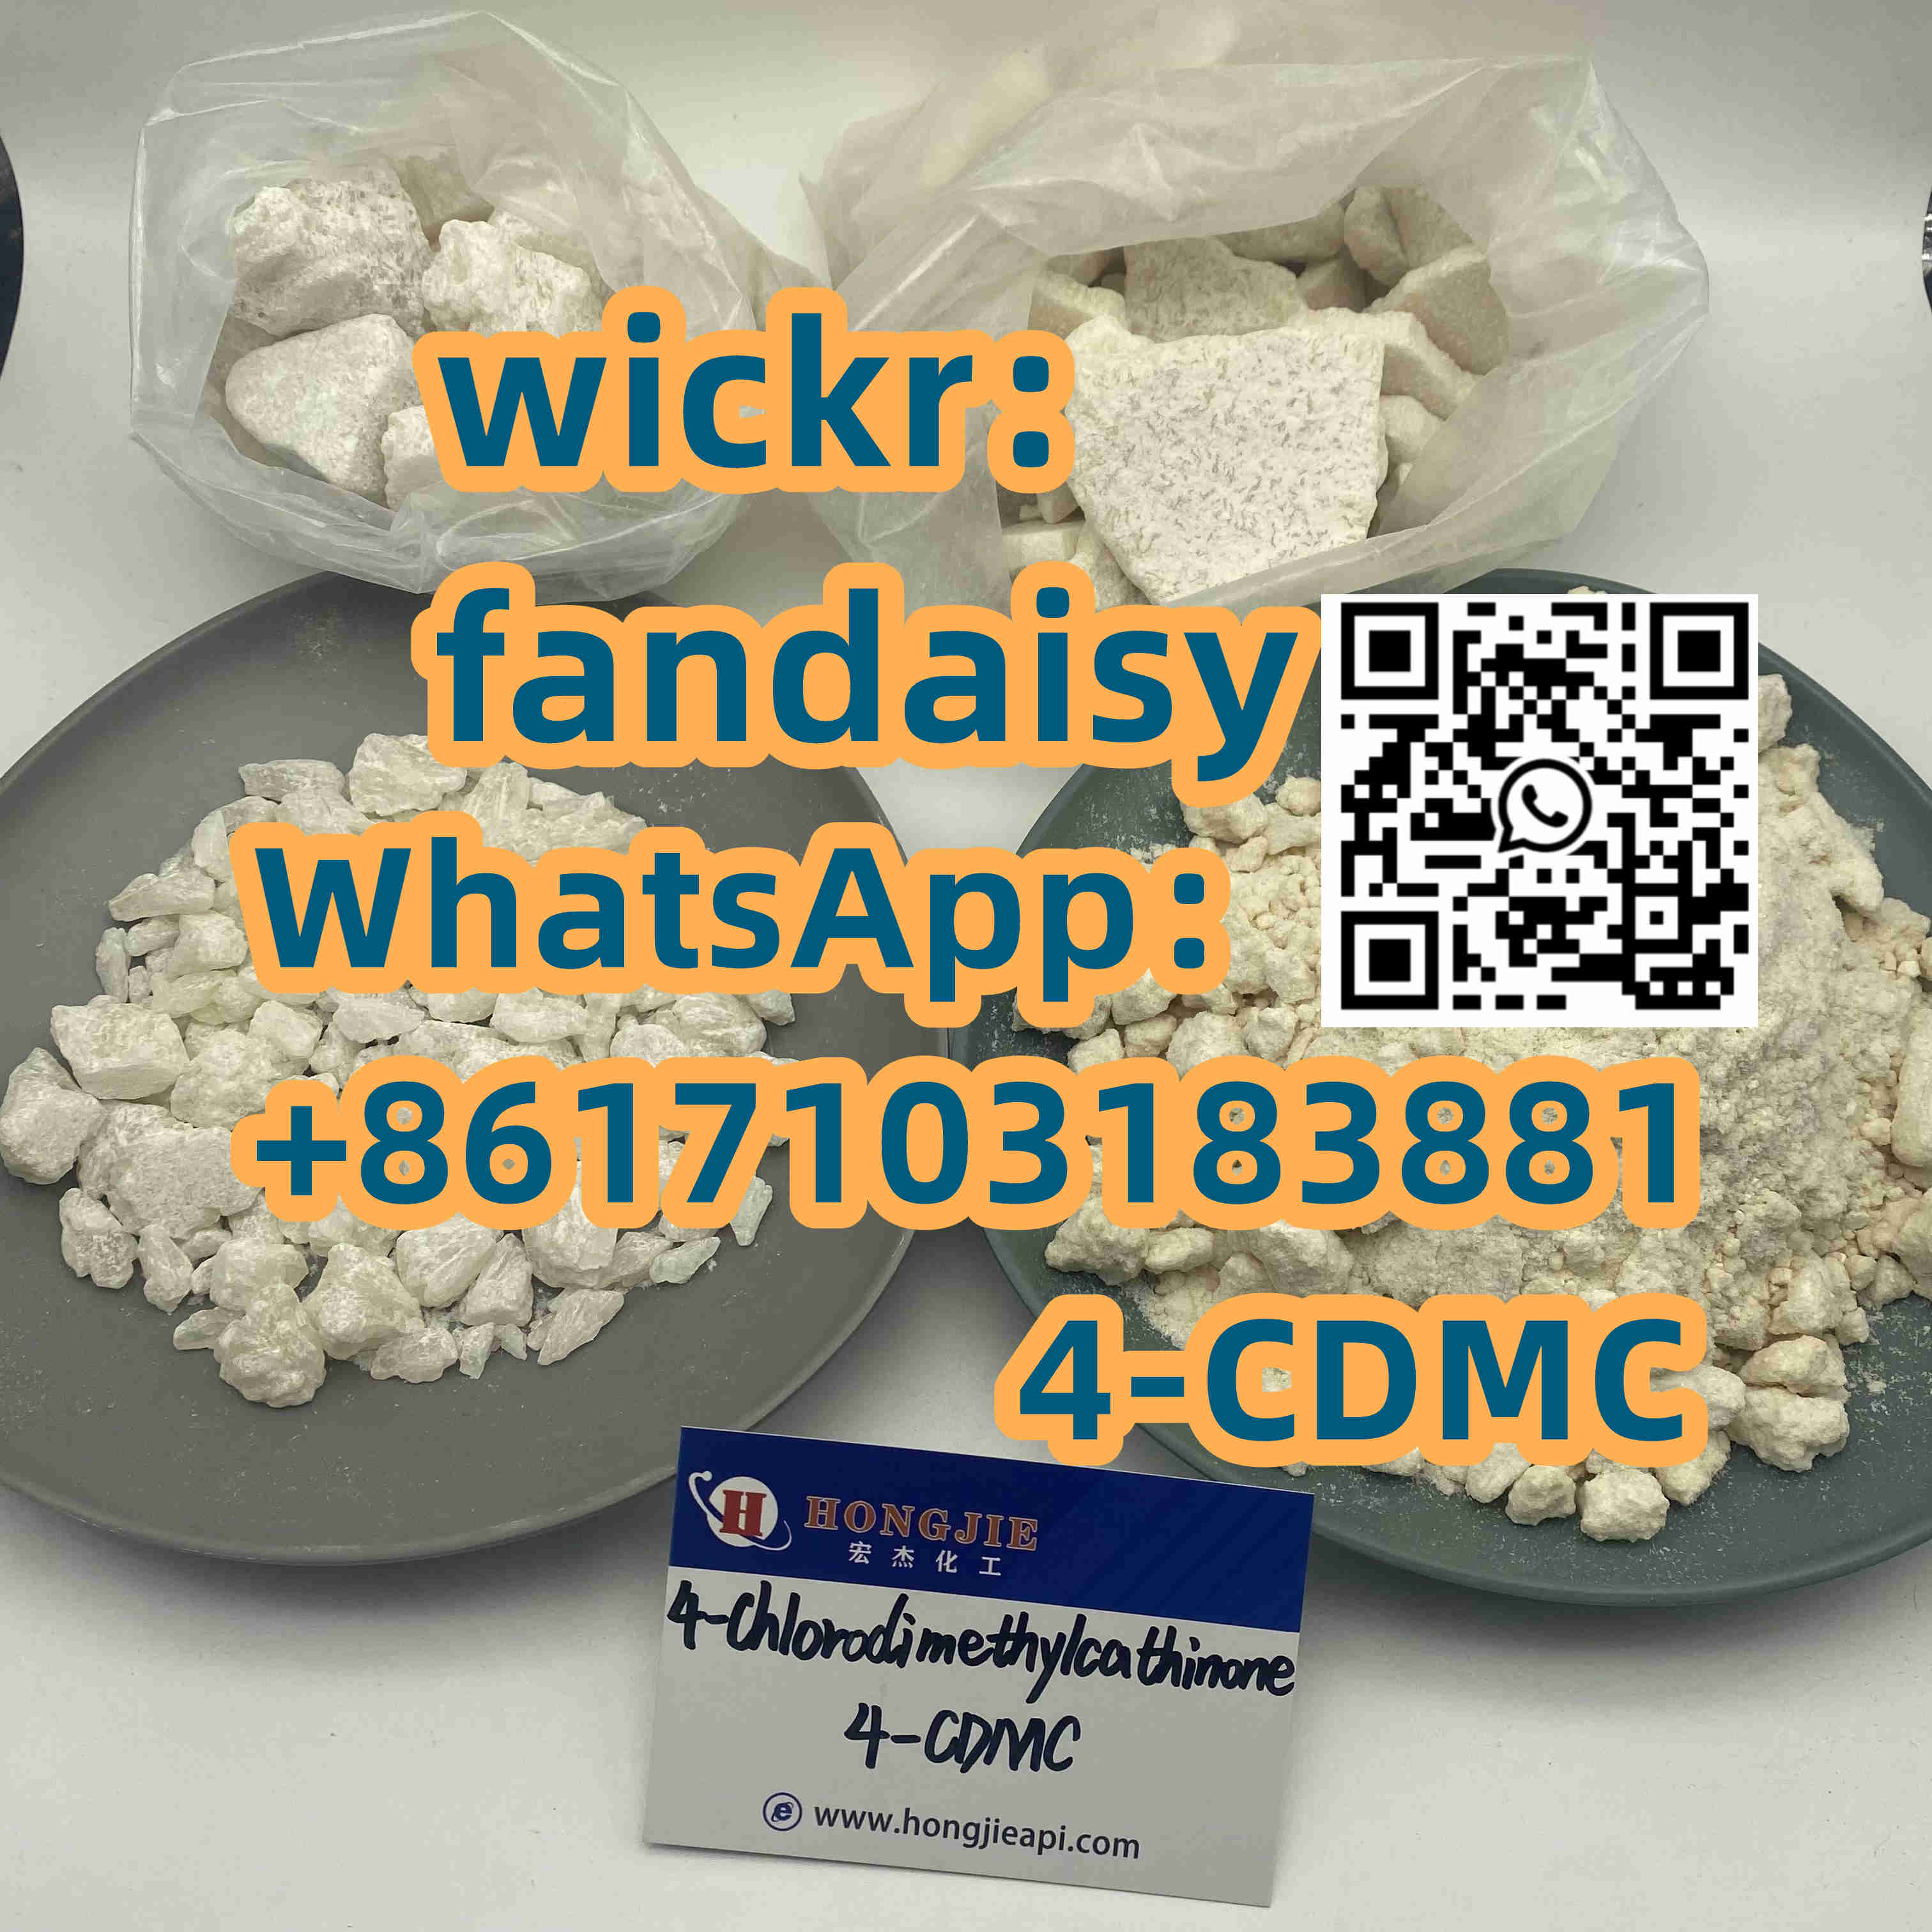 4-CDMC   Chinese suppliers  4-Chlorodimethylcathinone